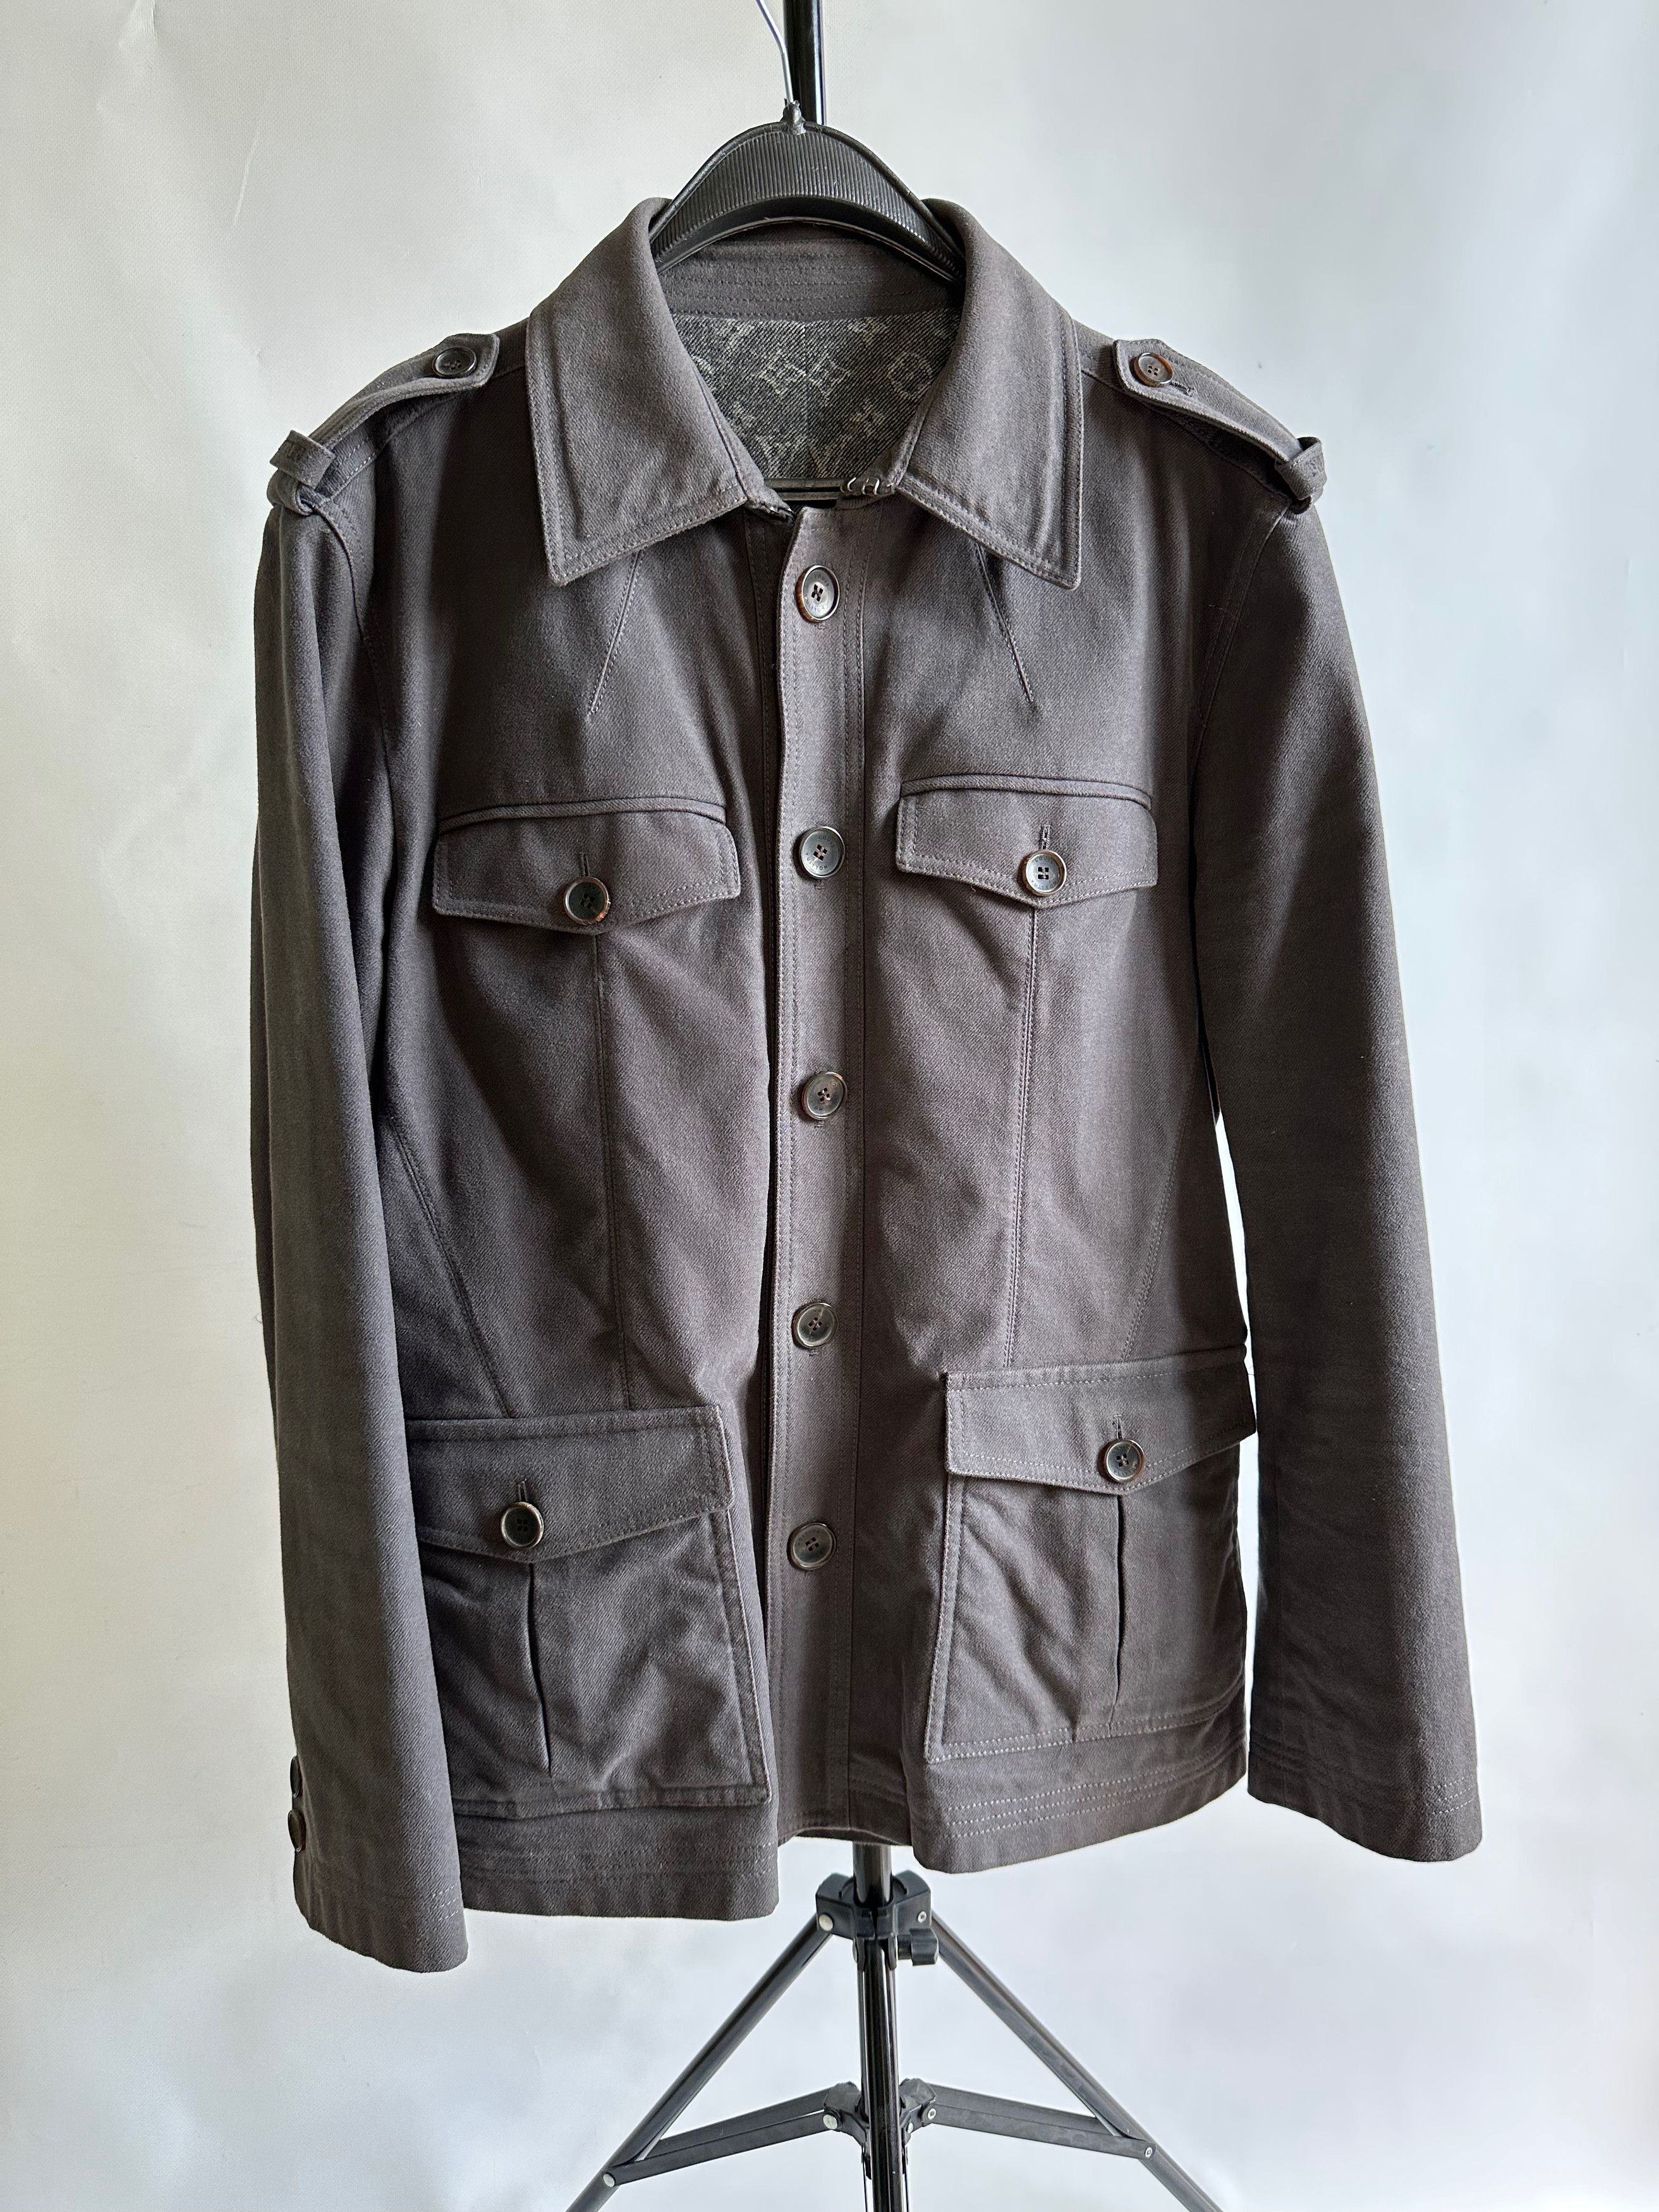 Louis Vuitton LOUIS VUITTON M65 gray light jacket military style | Grailed